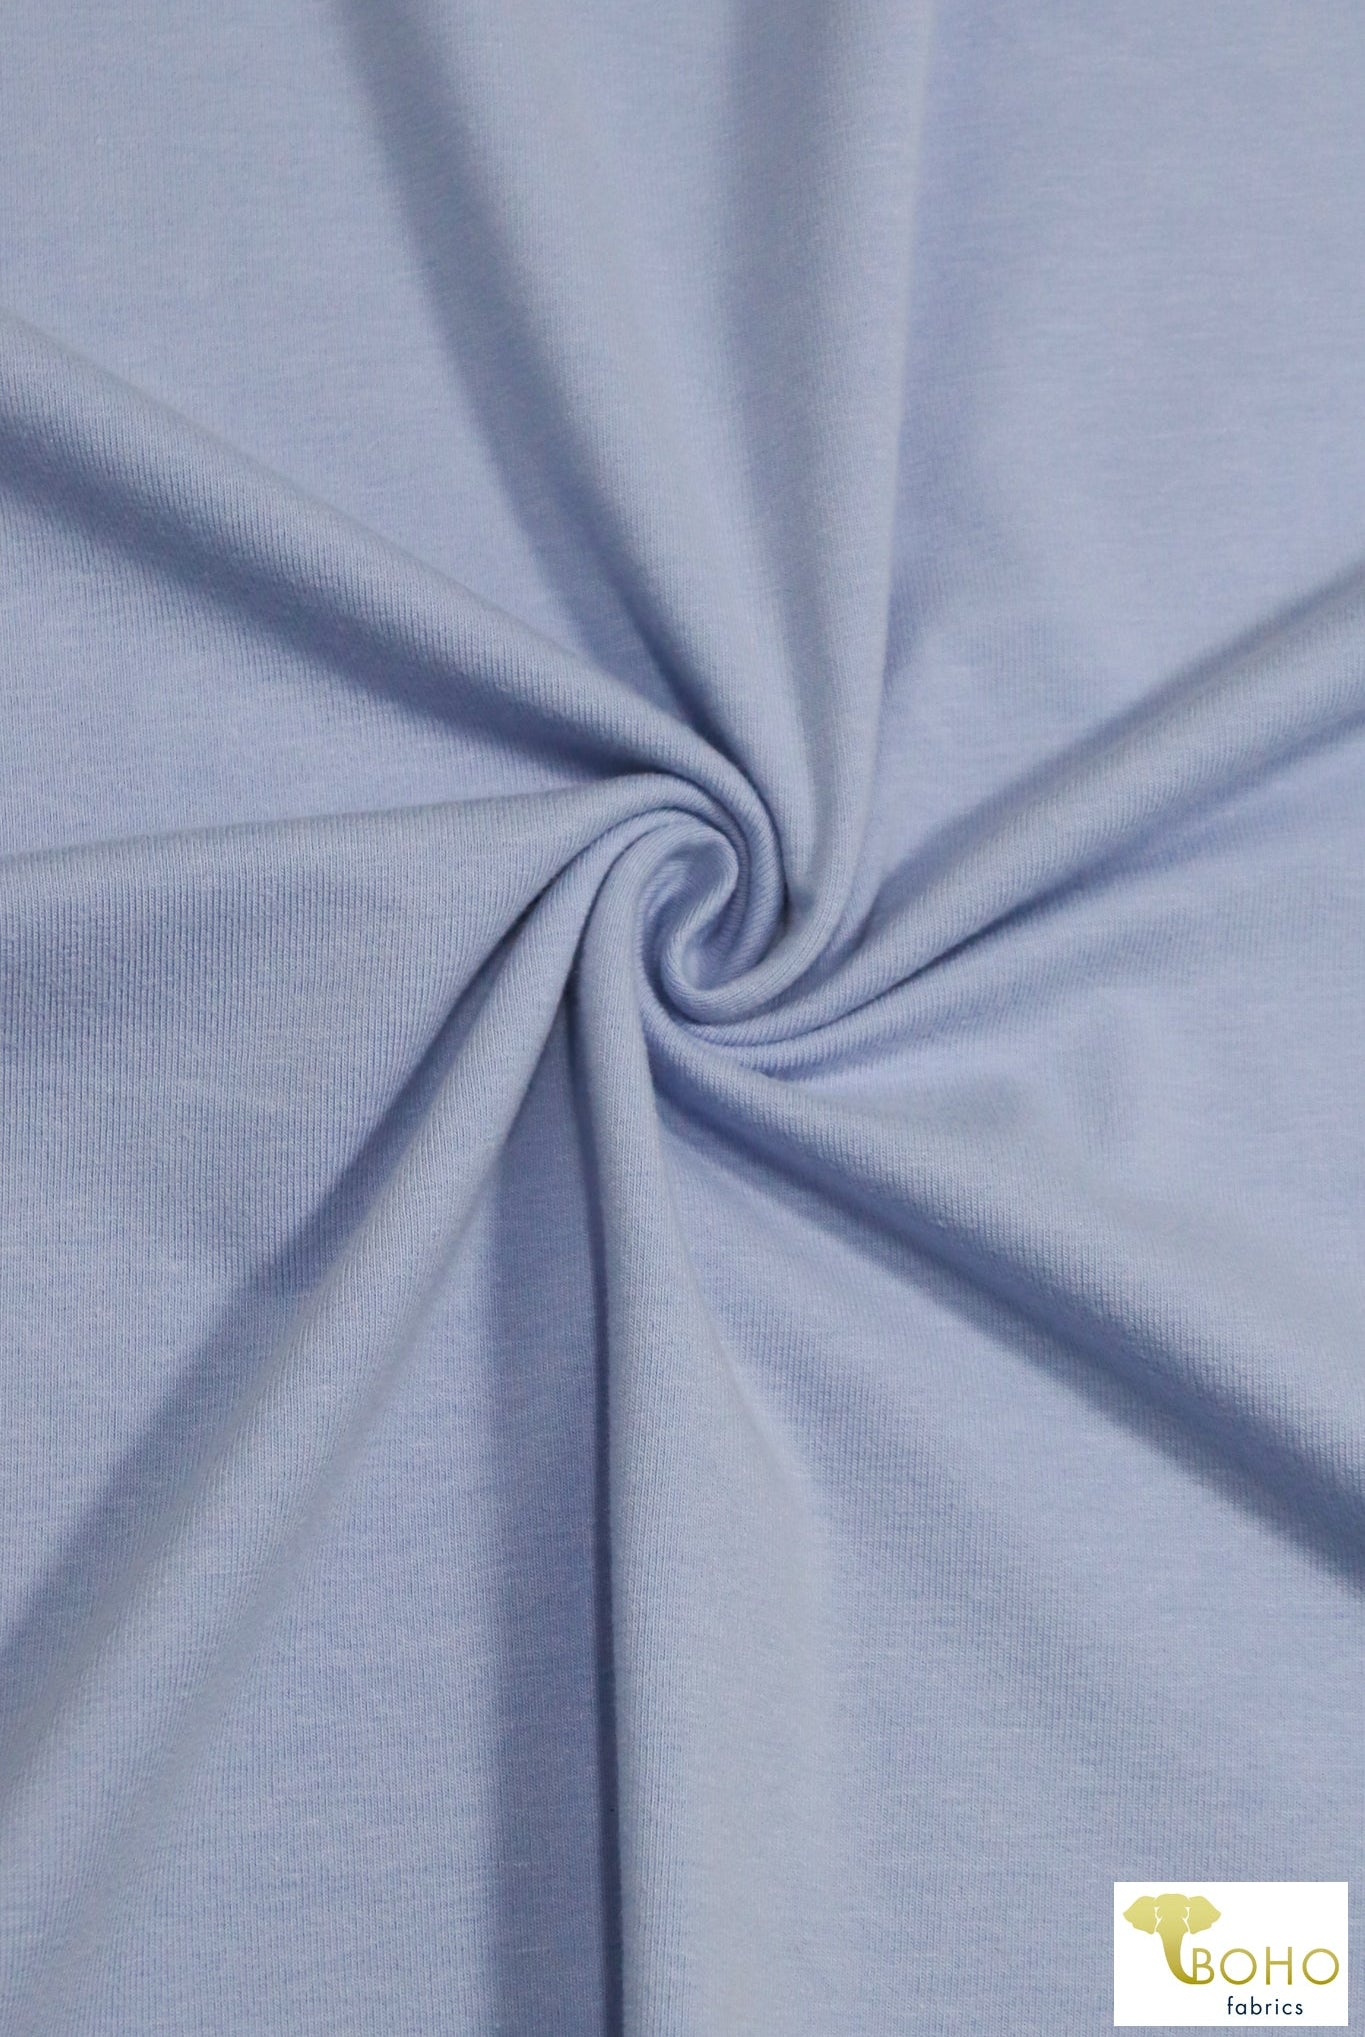 Periwinkle, Cotton Spandex Knit, 10 oz. - Boho Fabrics